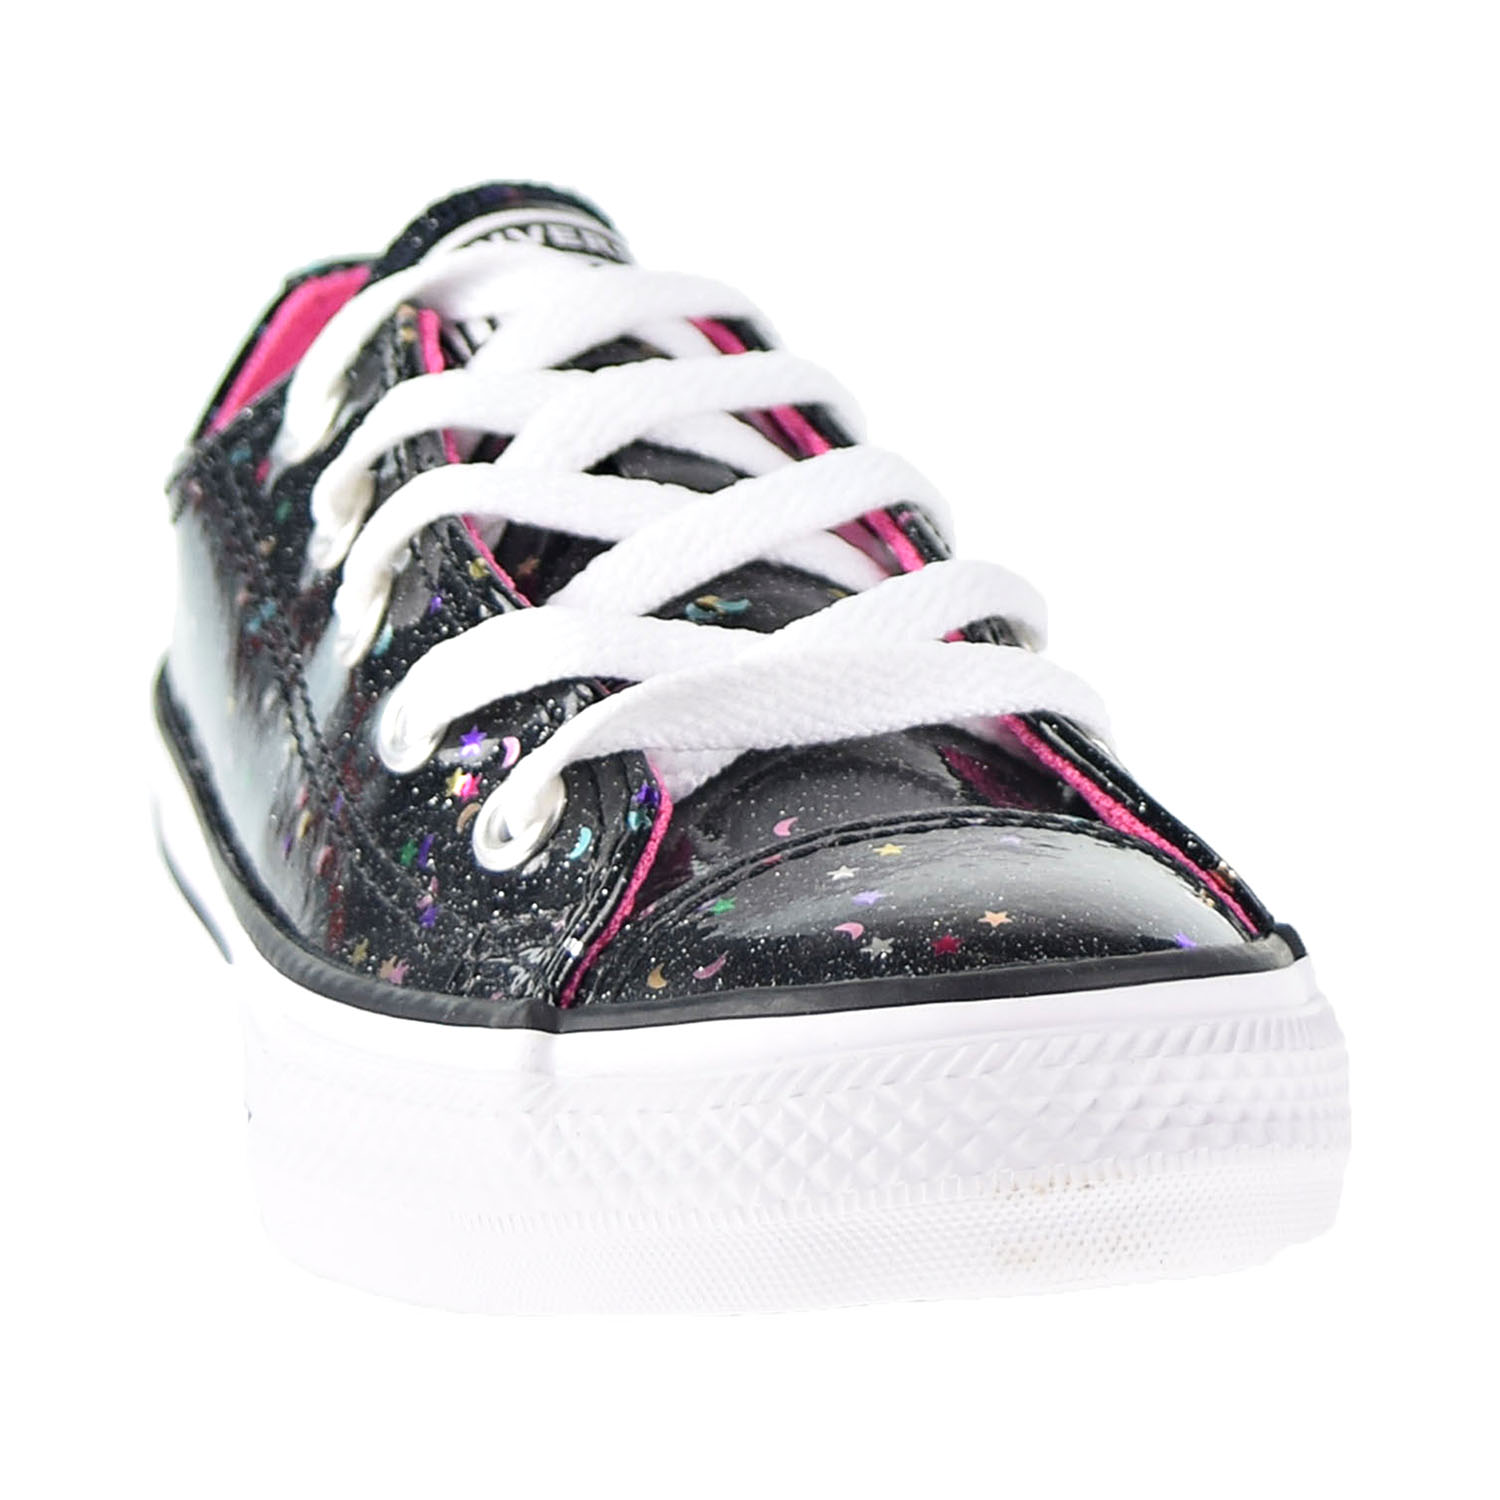 Converse Chuck Taylor All Star Ox Sparkle Kids' Shoes Black-Mod Pink 665106c